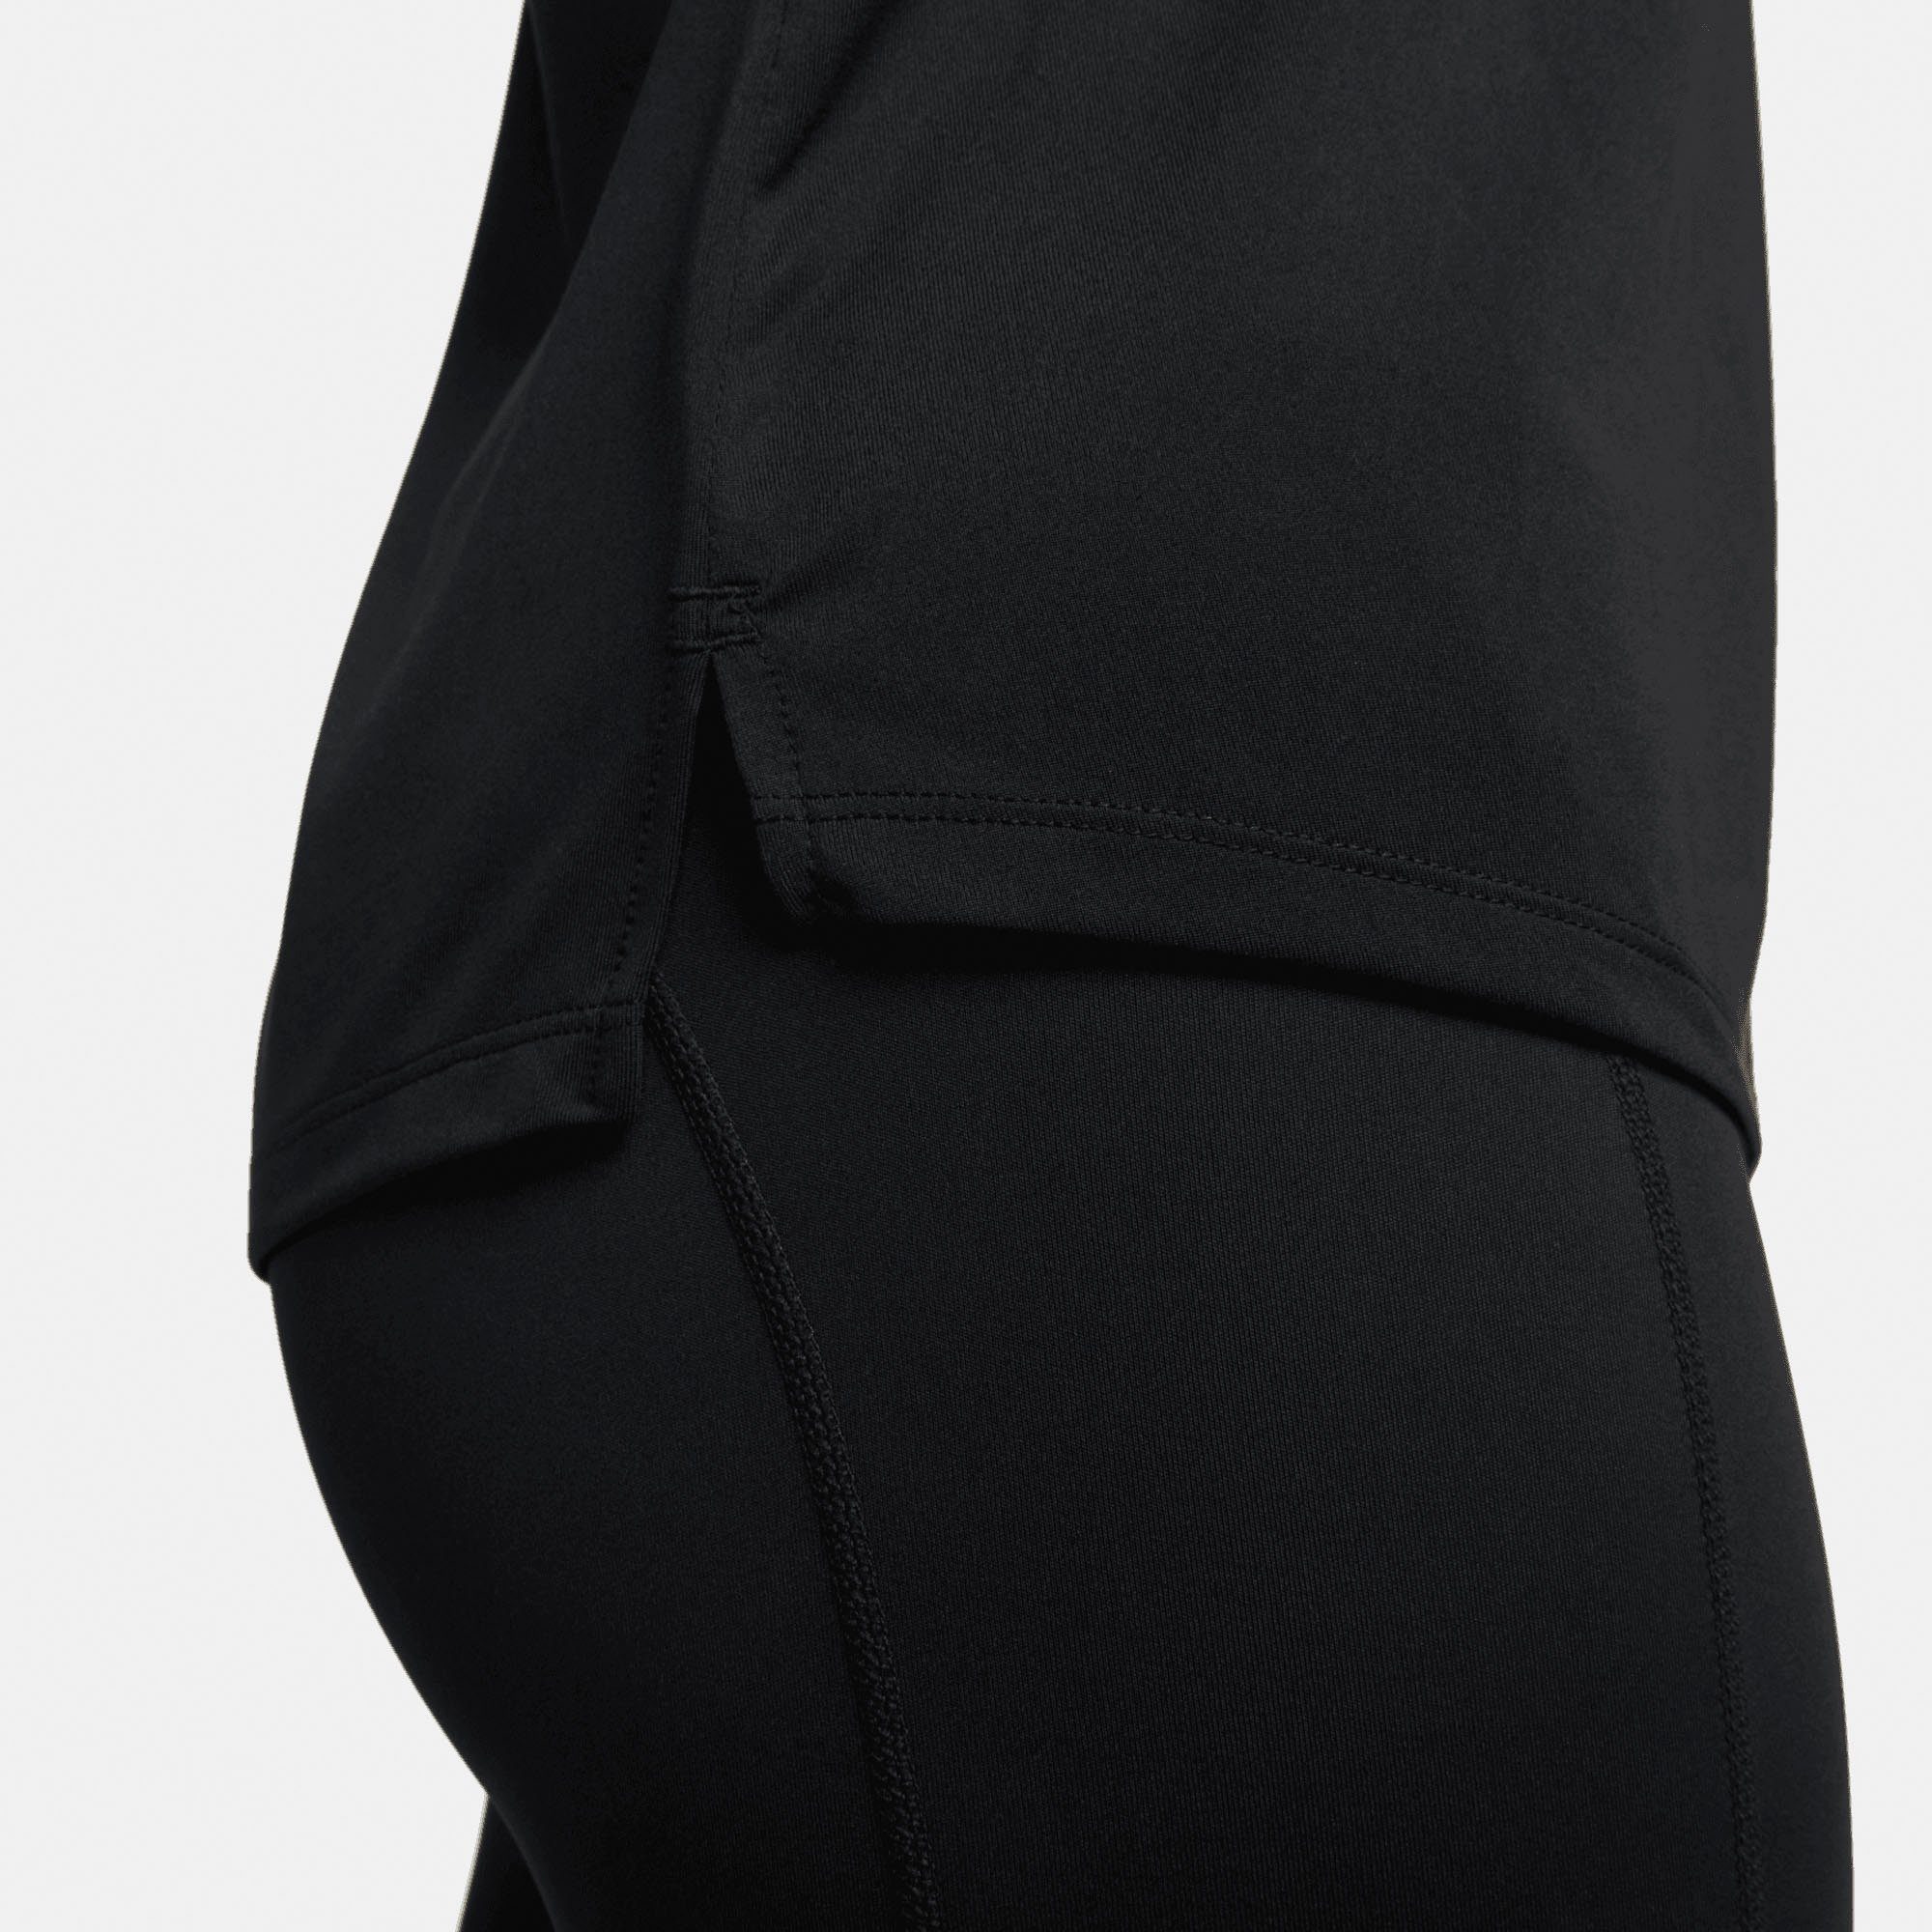 One Dri-FIT BLACK Short-Sleeved Nike Swoosh Top Women's Laufshirt